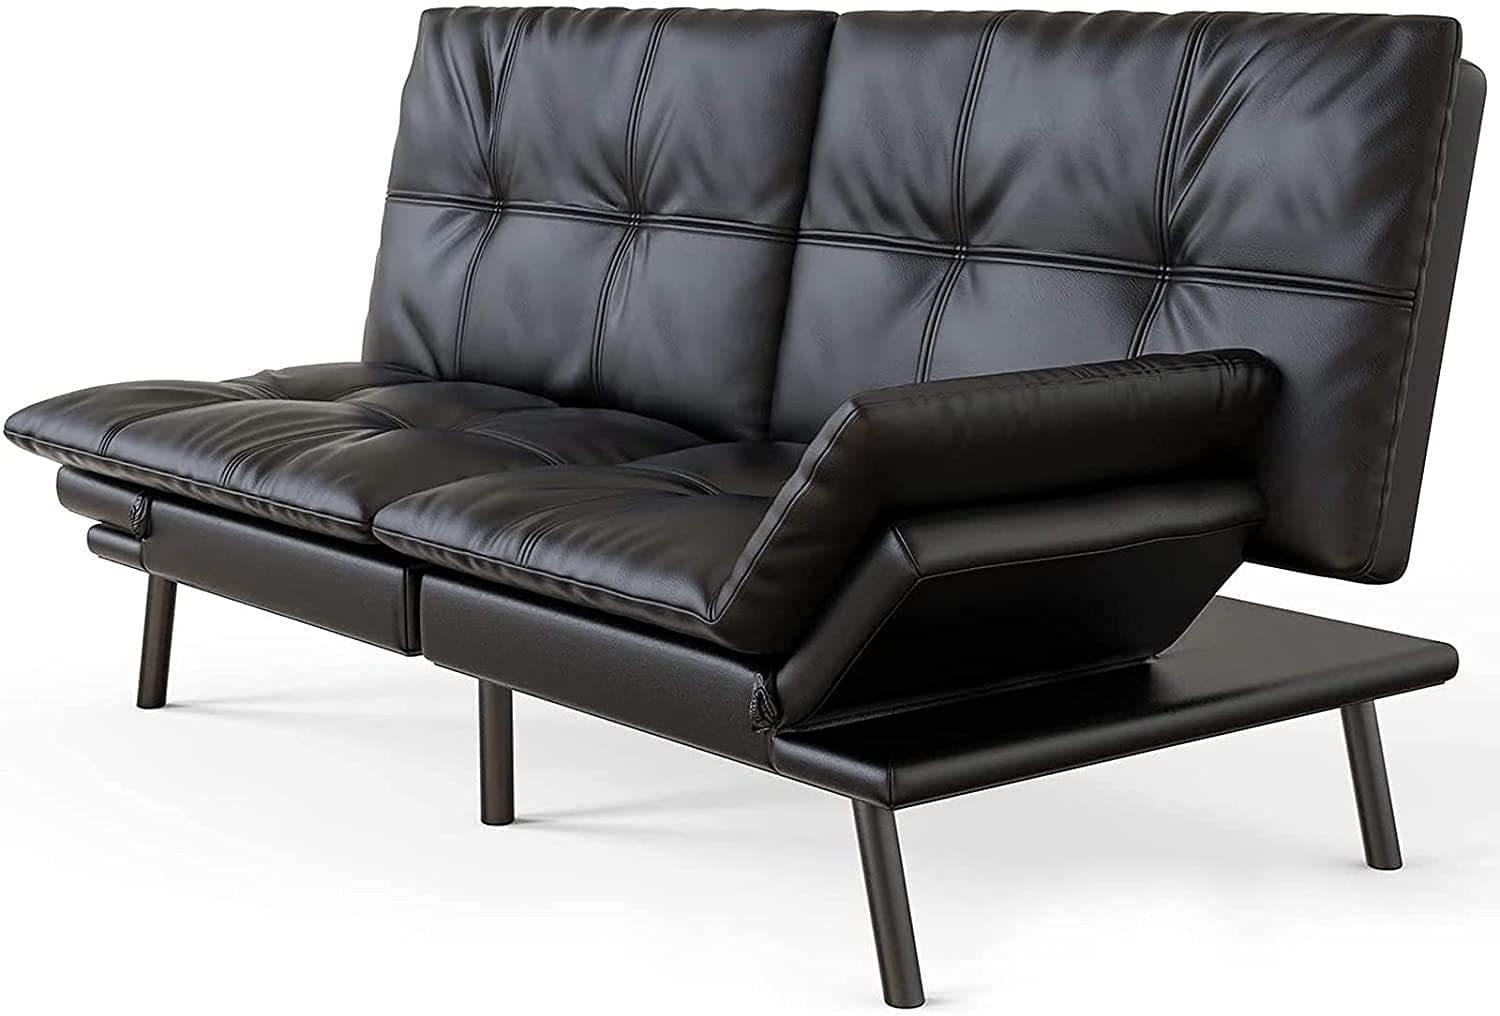 convertible/adjustable sofa bed